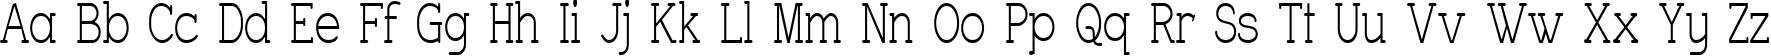 Пример написания английского алфавита шрифтом Charrington Narrow